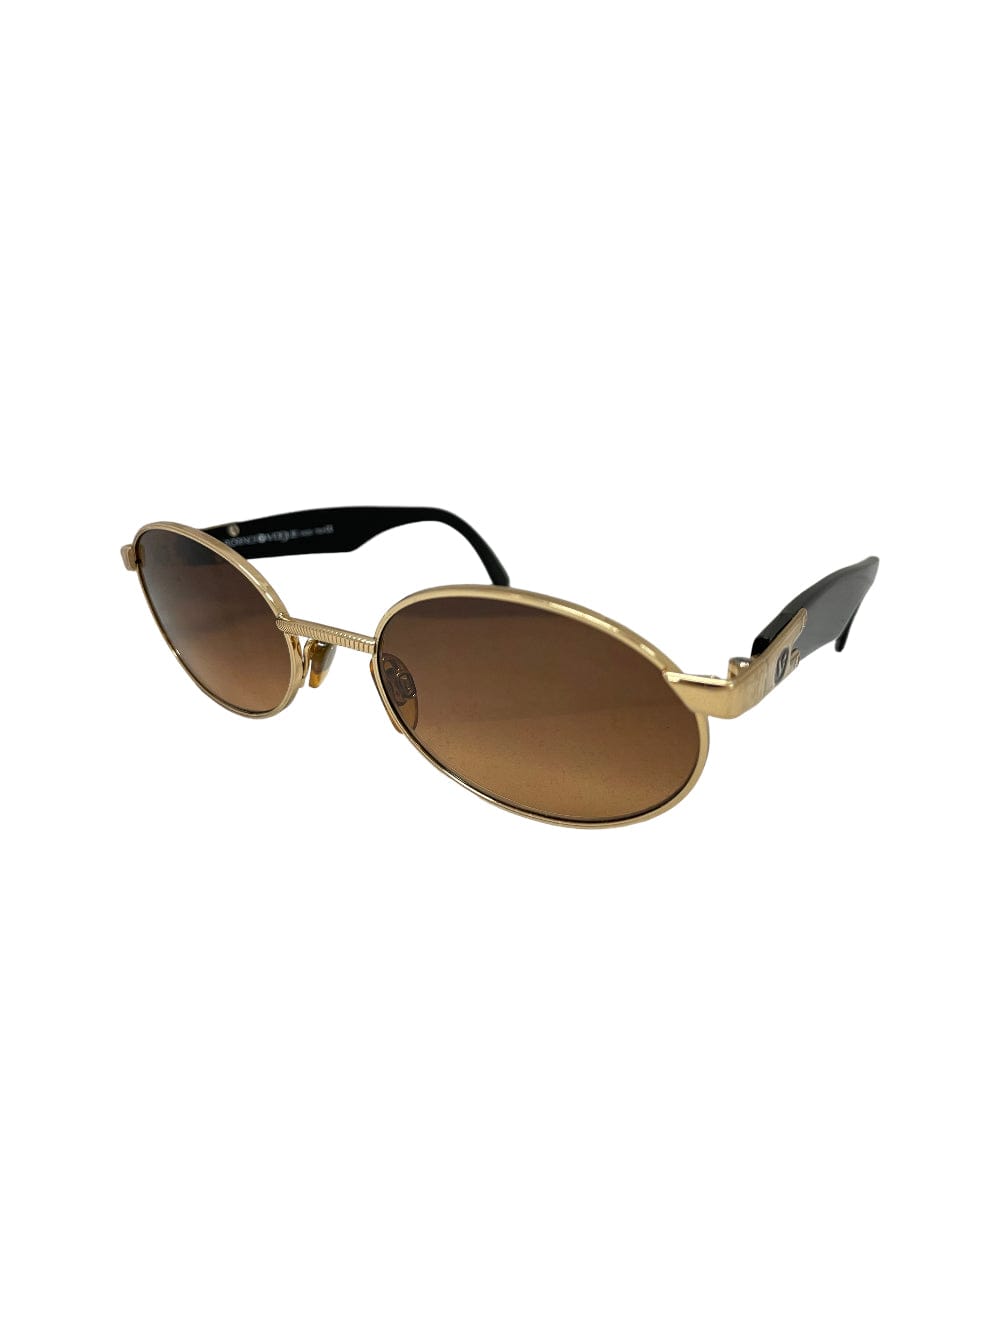 Vogue Eyewear Florence - Gold & Black Sunglasses